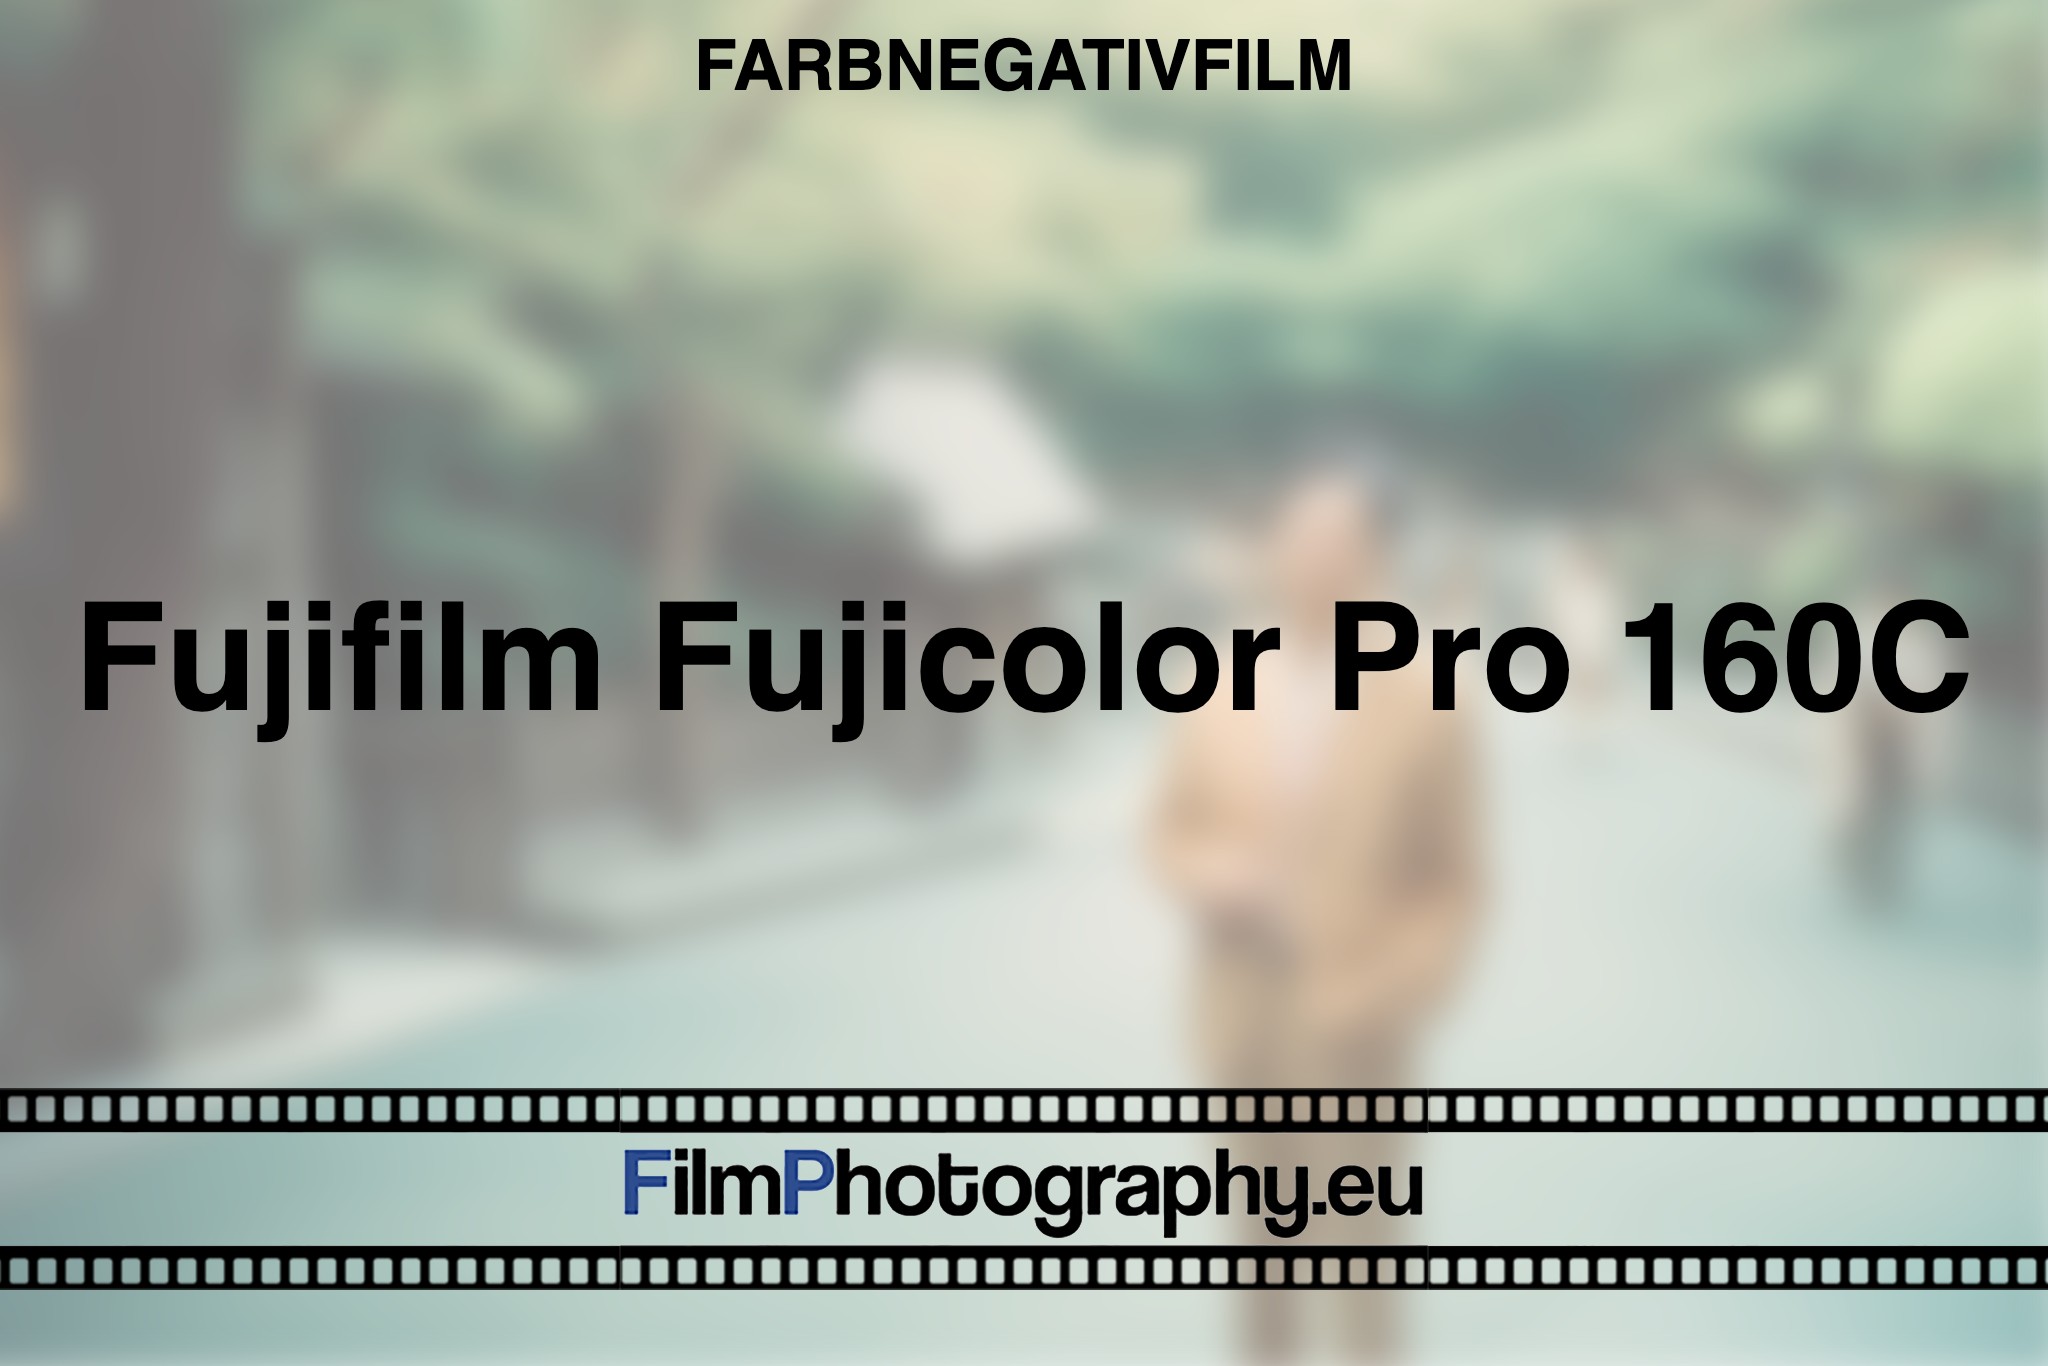 fujifilm-fujicolor-pro-160c-farbnegativfilm-bnv